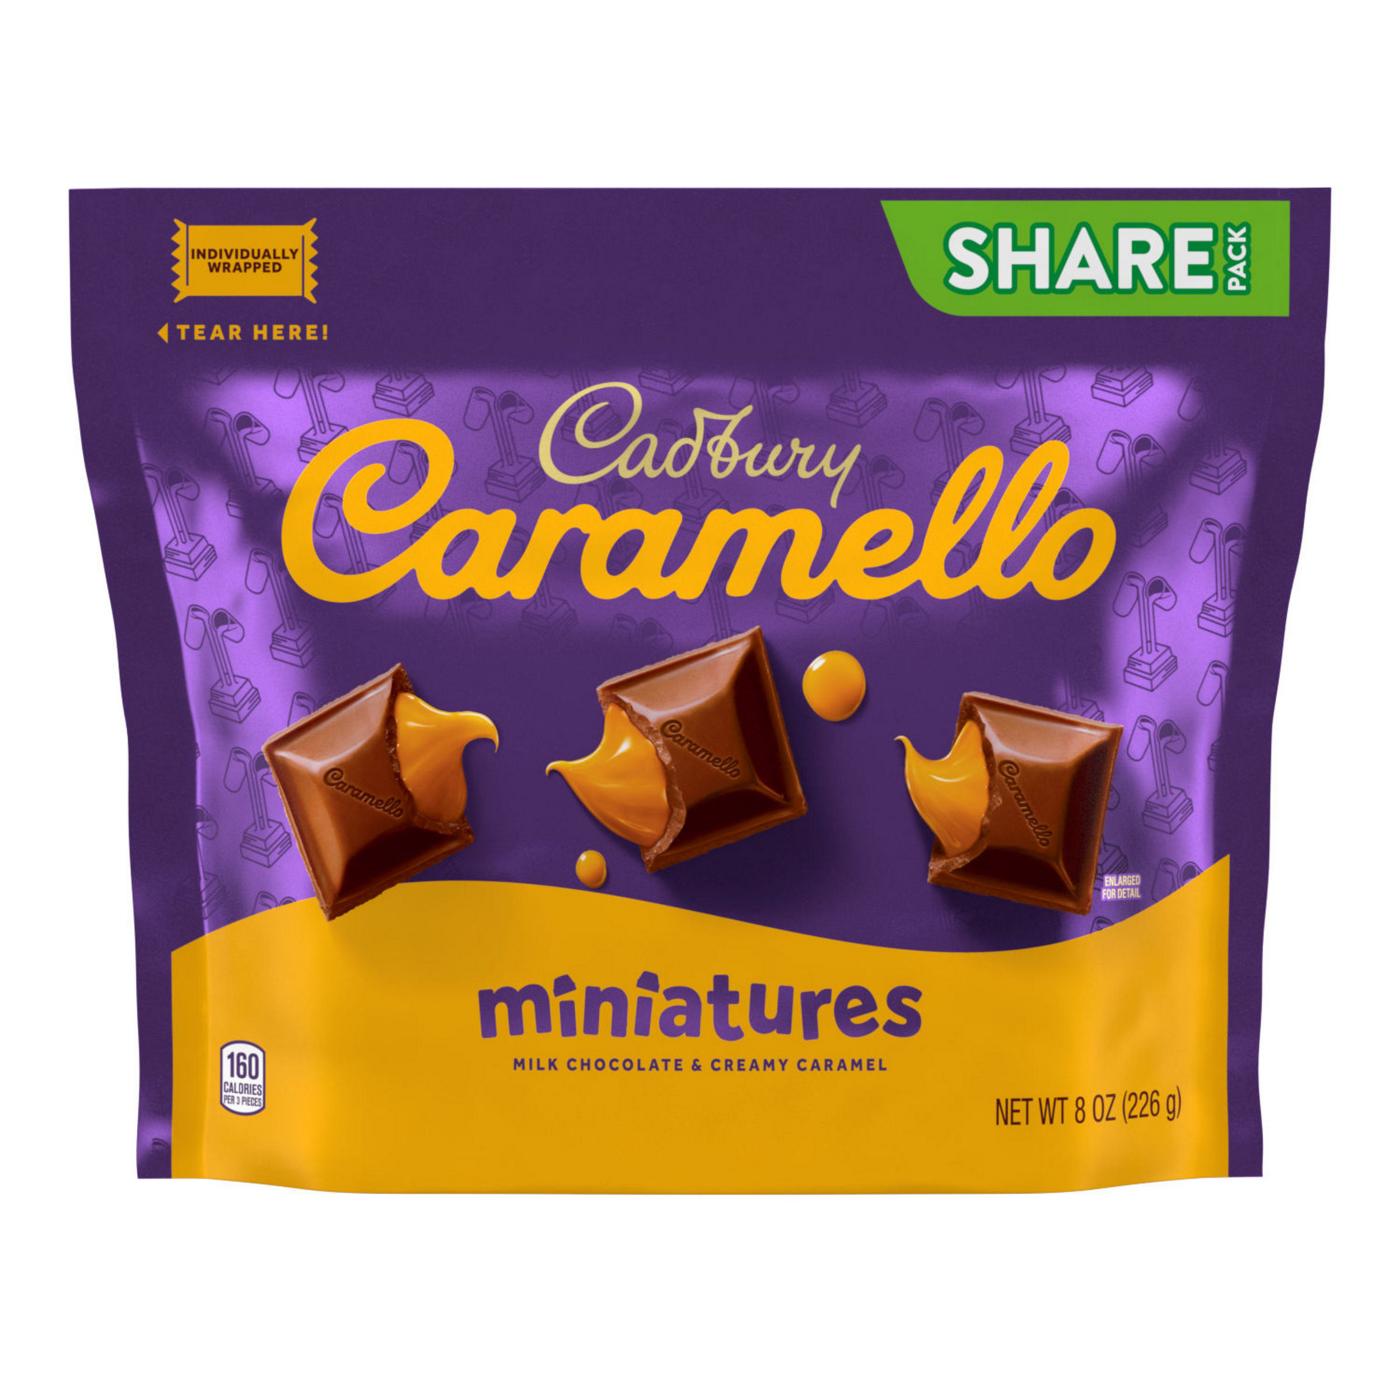 Cadbury Caramello Miniatures Candy - Share Pack; image 1 of 3